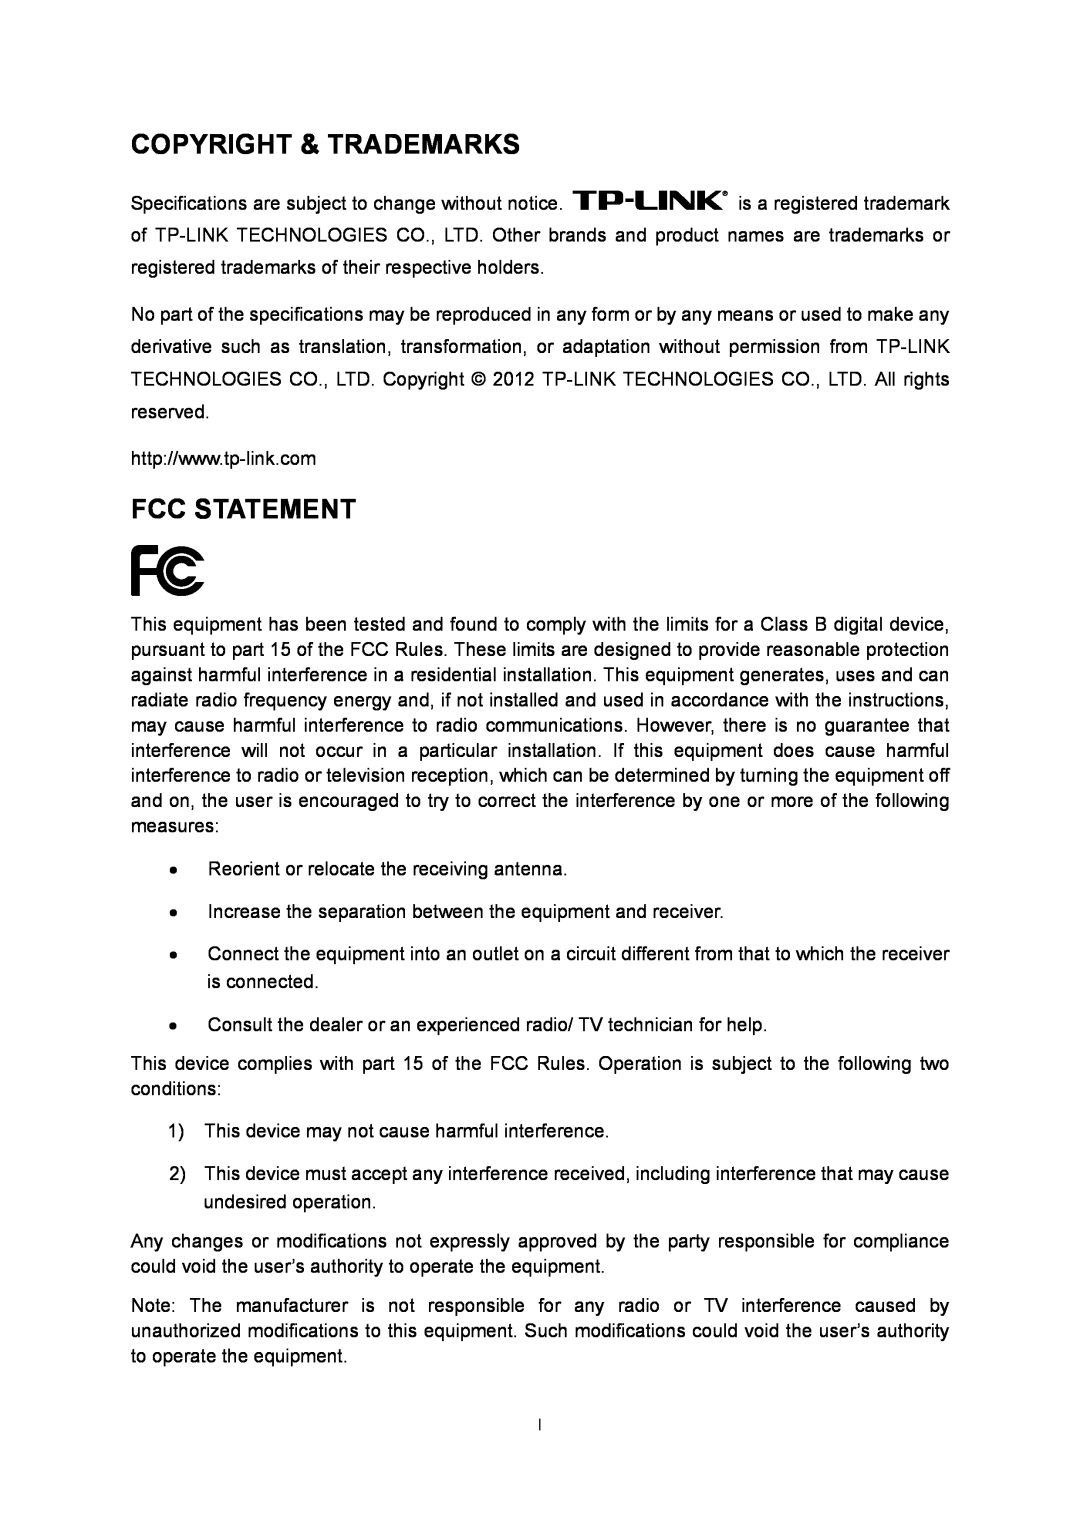 TP-Link TL-WR941ND manual Copyright & Trademarks, Fcc Statement 